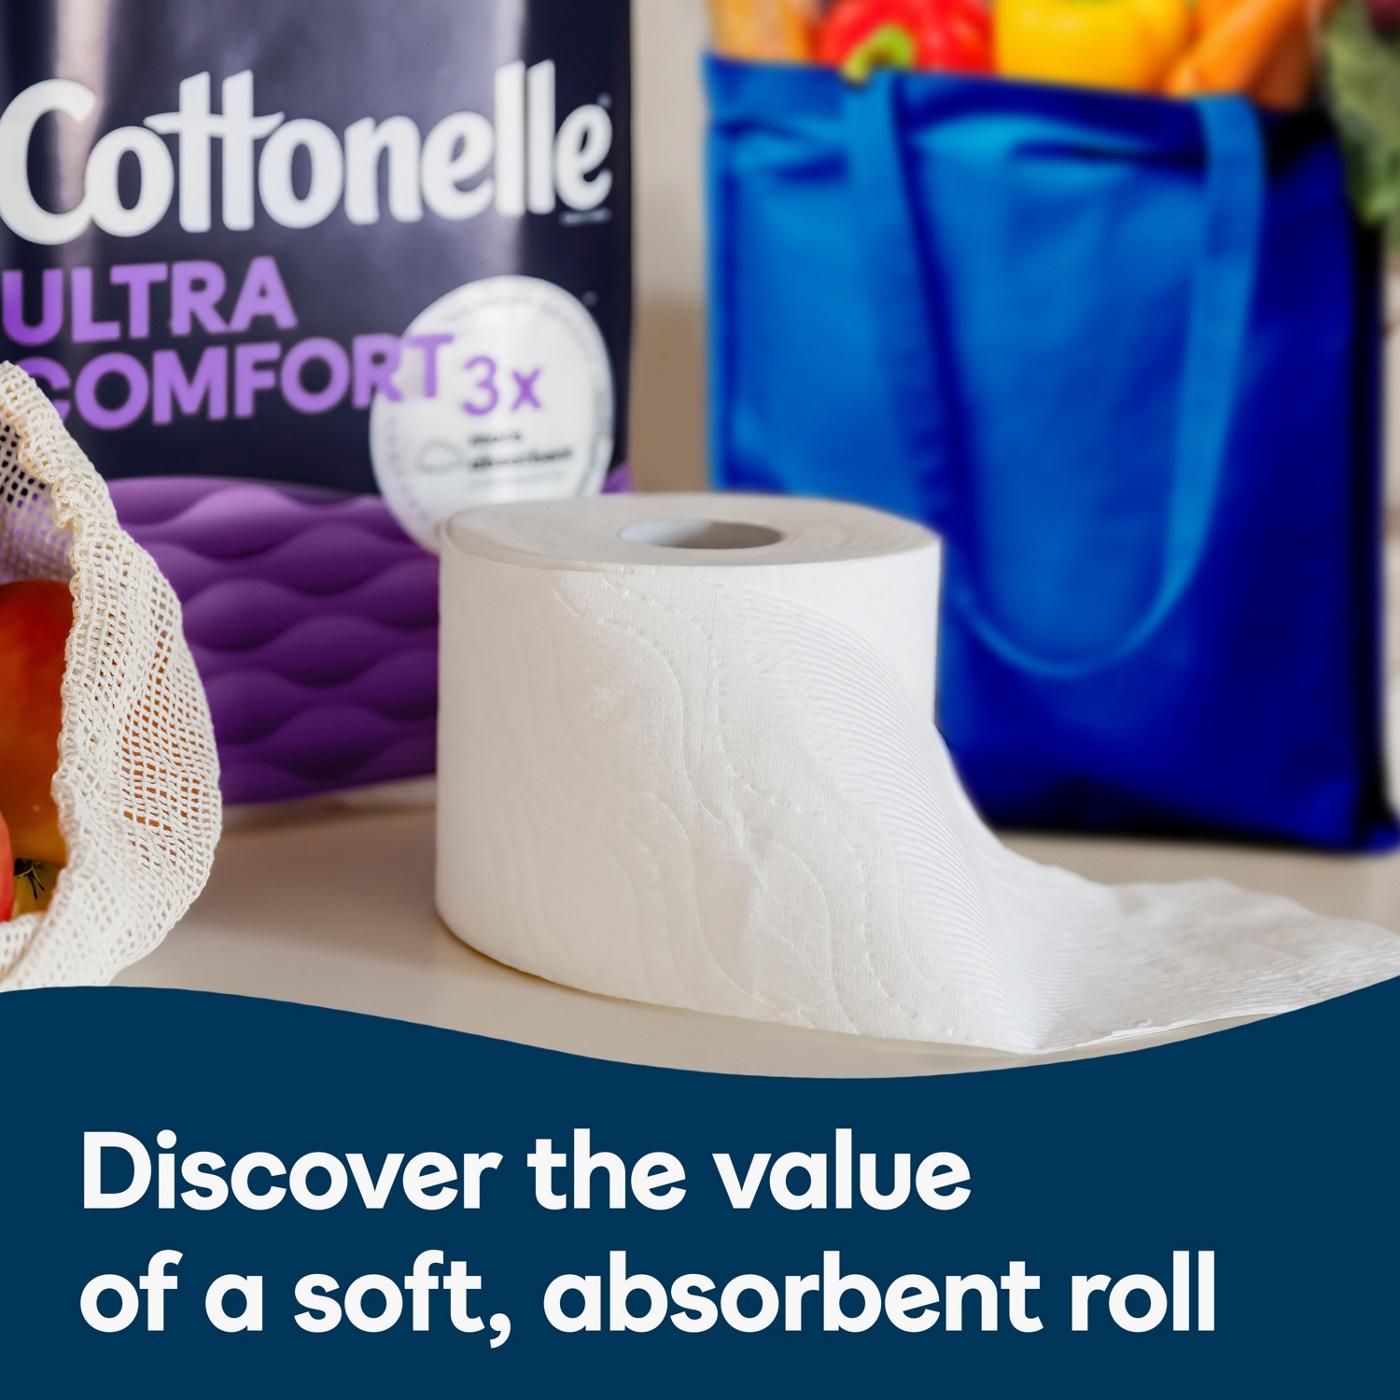 Cottonelle Ultra Comfort Soft Toilet Paper; image 4 of 9